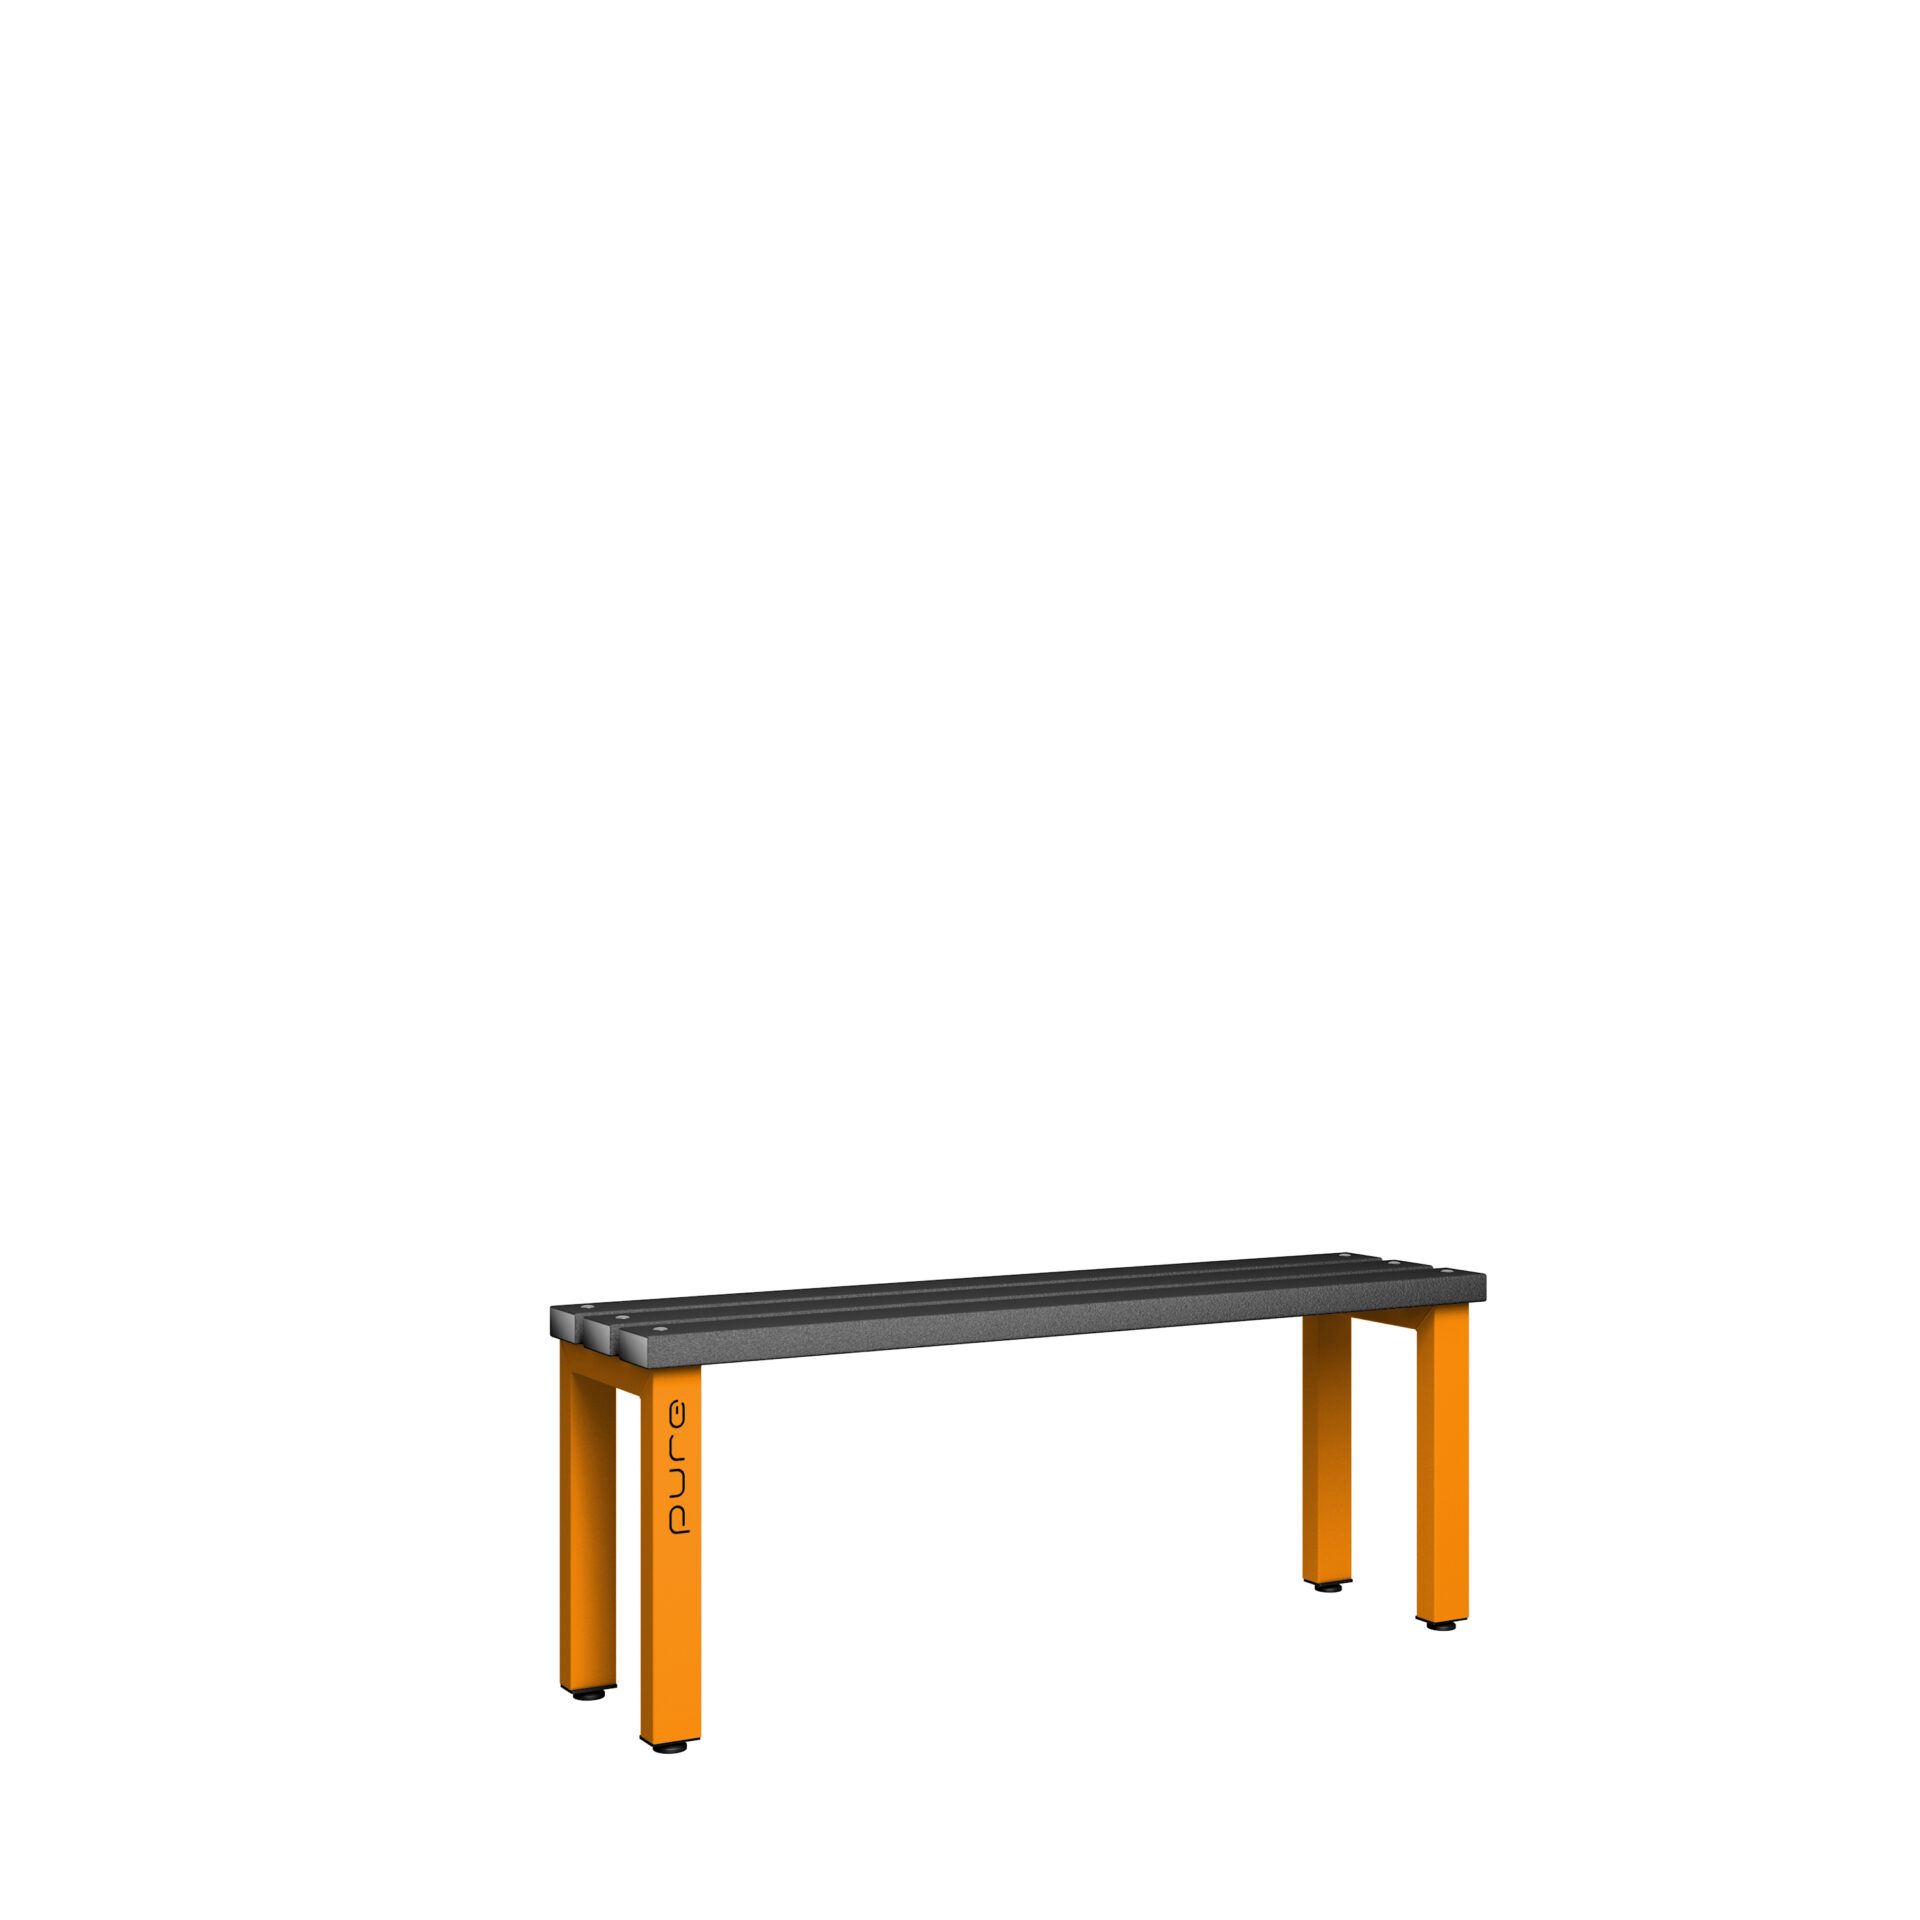 Pure Carbon Zero Single Sided 1200mm Standard Bench - Magma Orange / Black Polymer